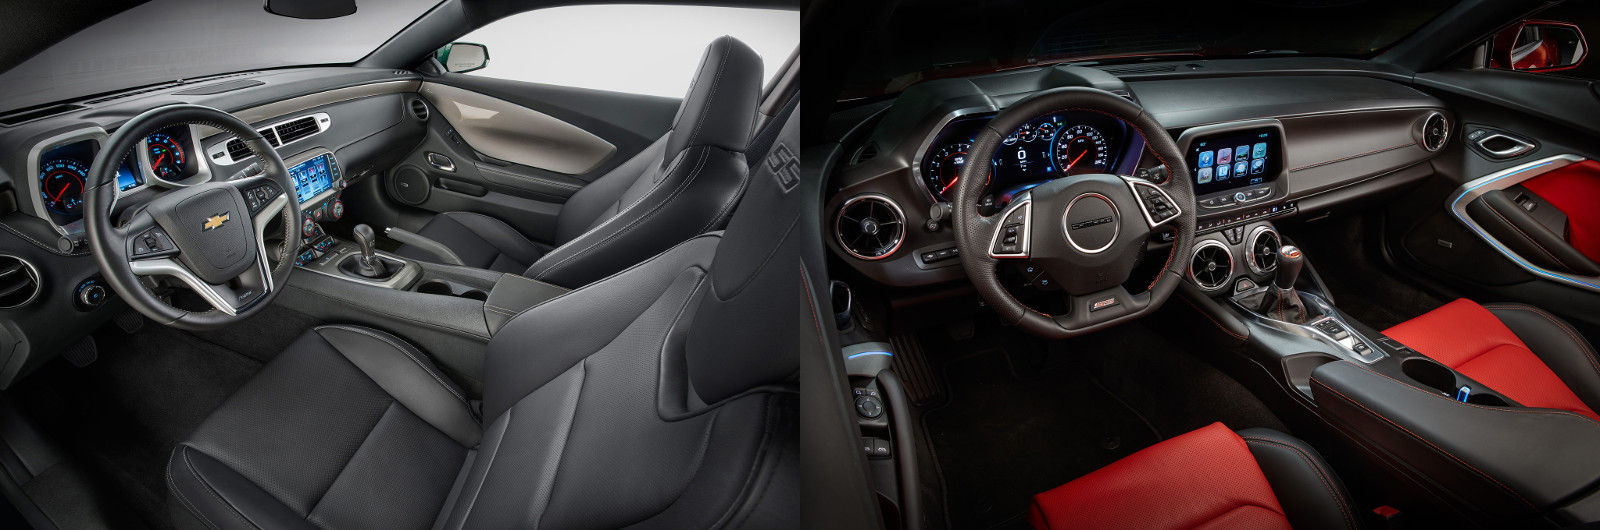 2016 Chevrolet Camaro Interior Hot Or Not Gm Authority